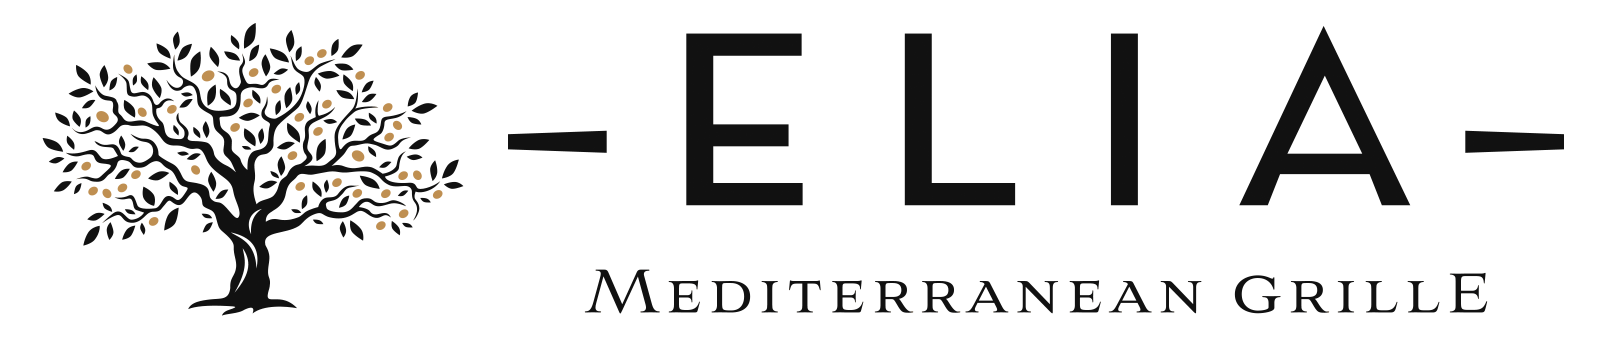 Elia Mediterranean Grille logo top - Homepage